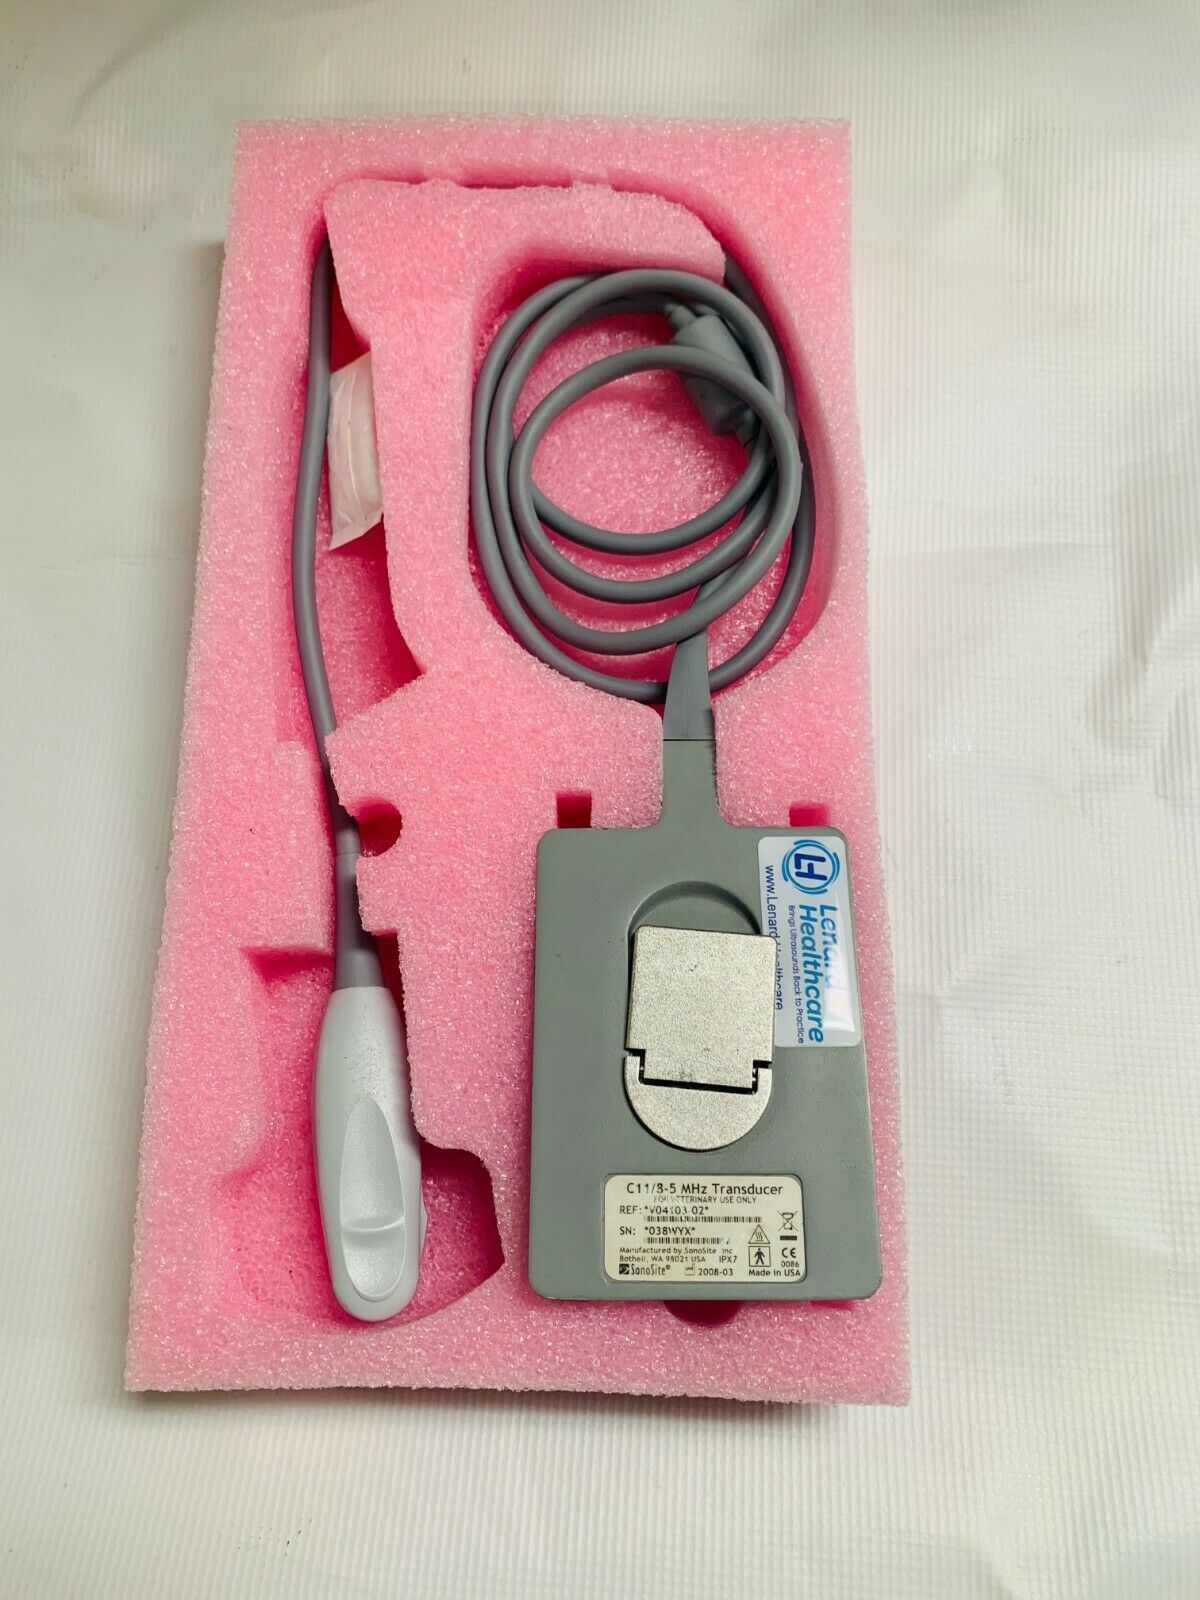 Veterinary Micro convex probe C11 8-5Mhz For Sonosite portable ultrasounds 2008 DIAGNOSTIC ULTRASOUND MACHINES FOR SALE